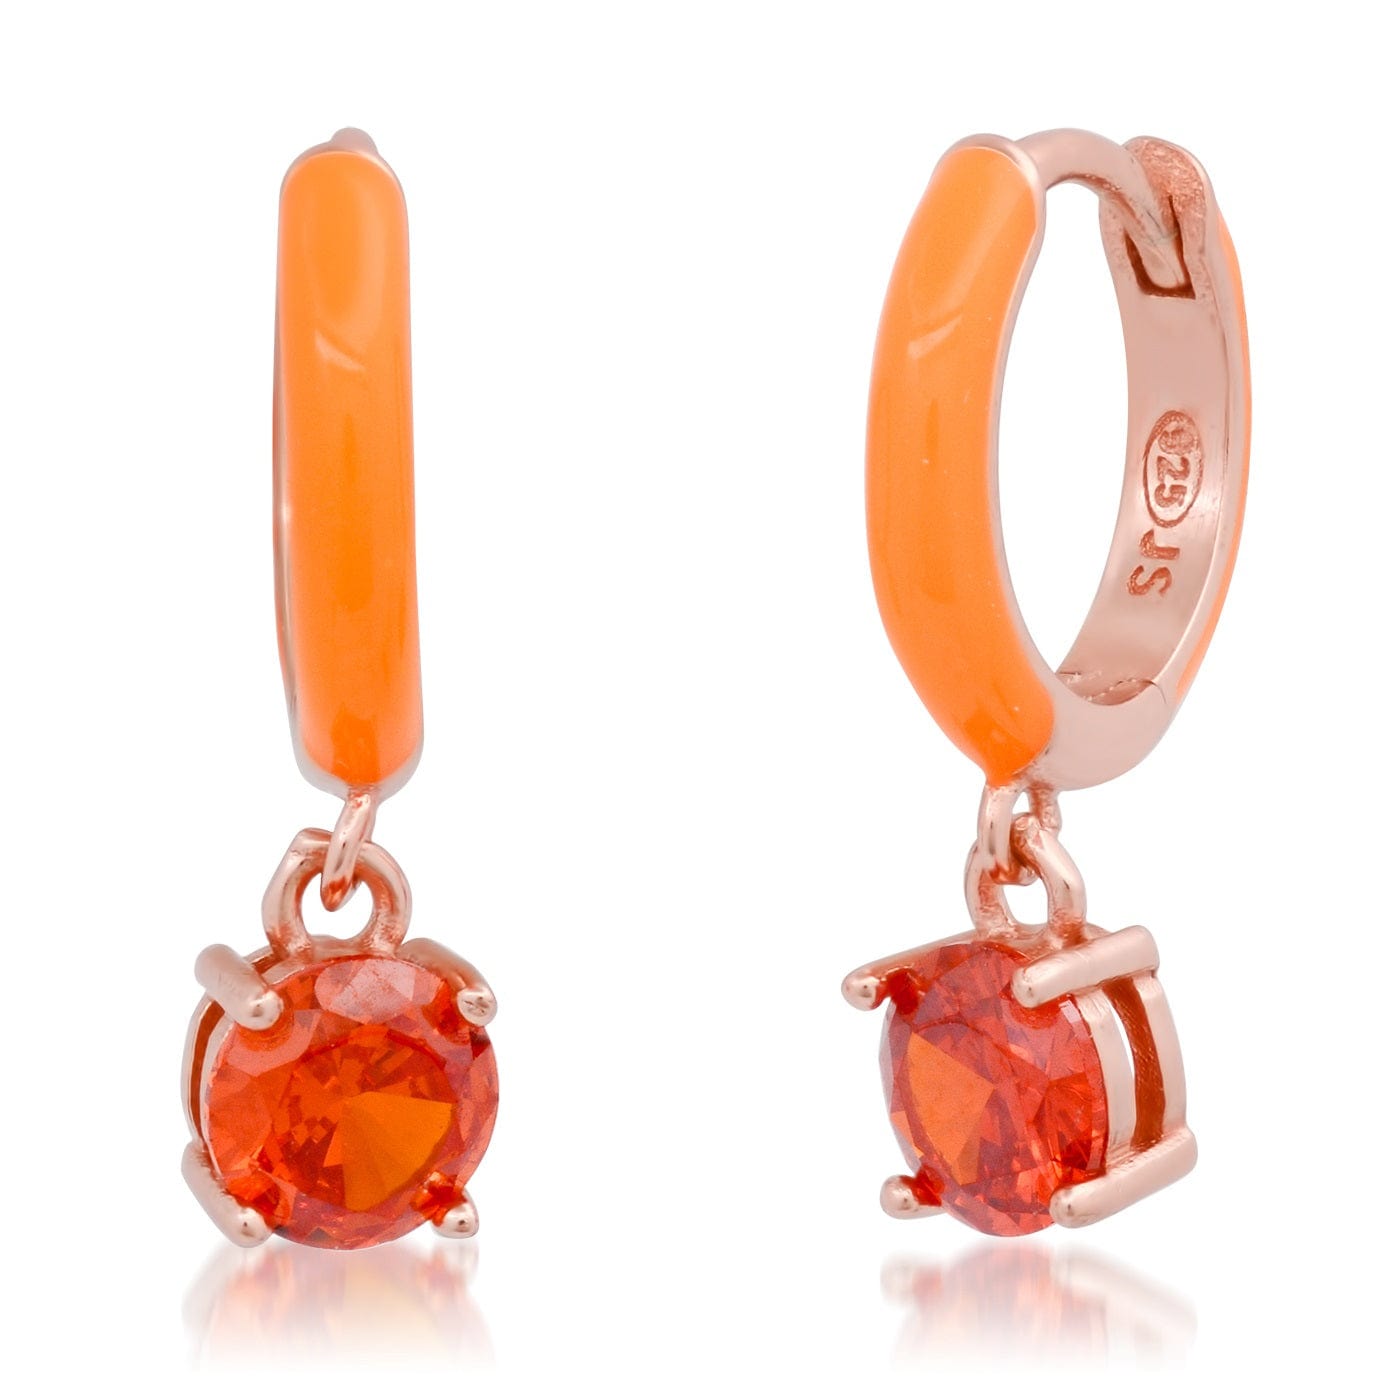 TAI JEWELRY Earrings Orange Enamel Huggie with Colored CZ Charm